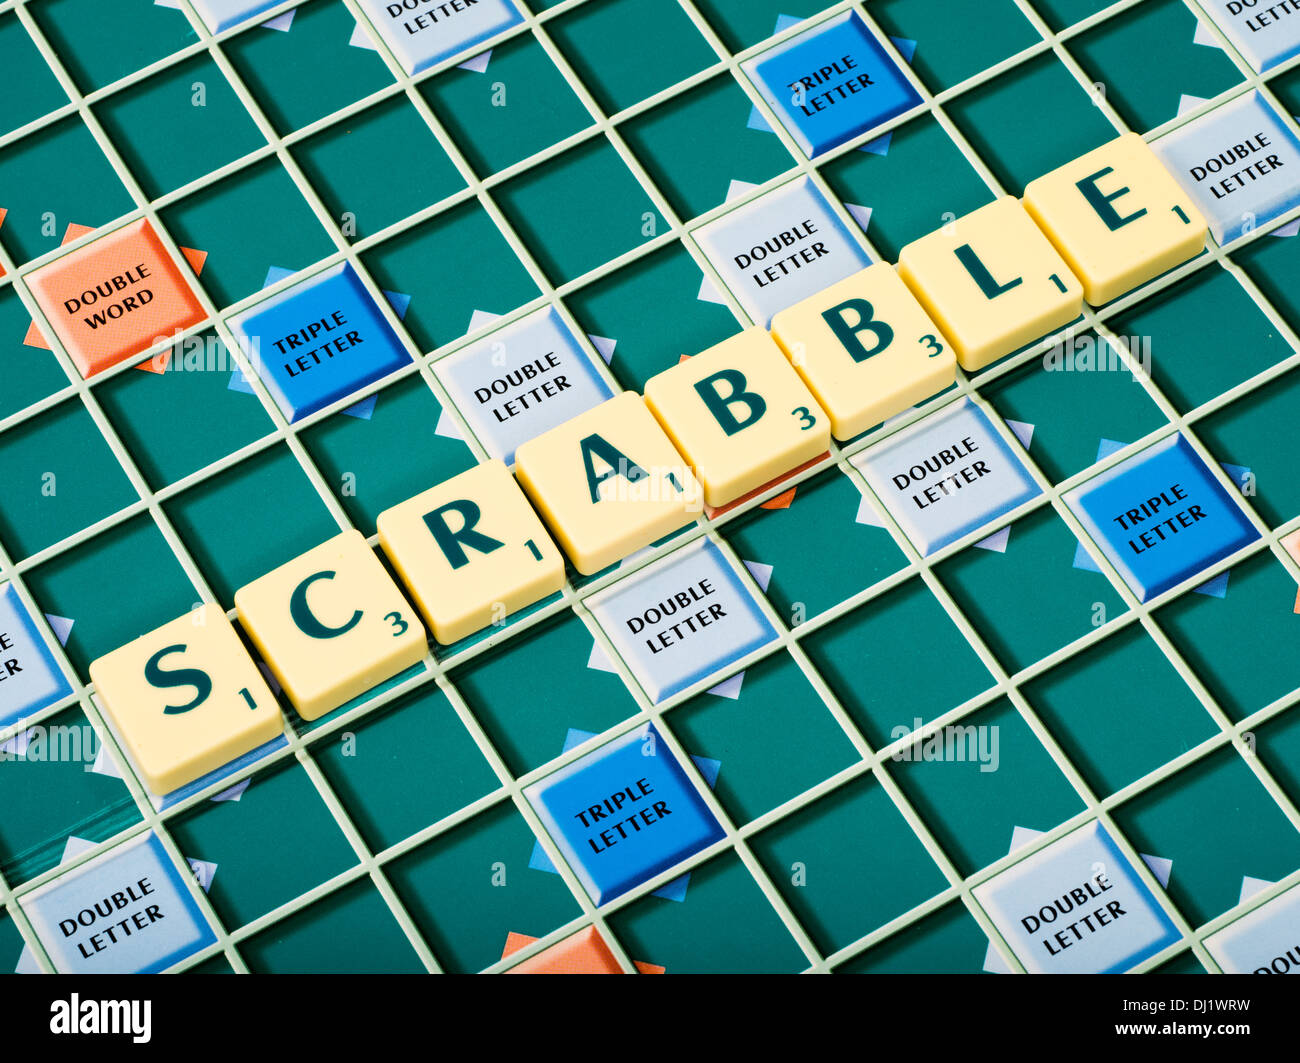 Scrabble Word Board Game by Mattel / Hasbro Stock Photo